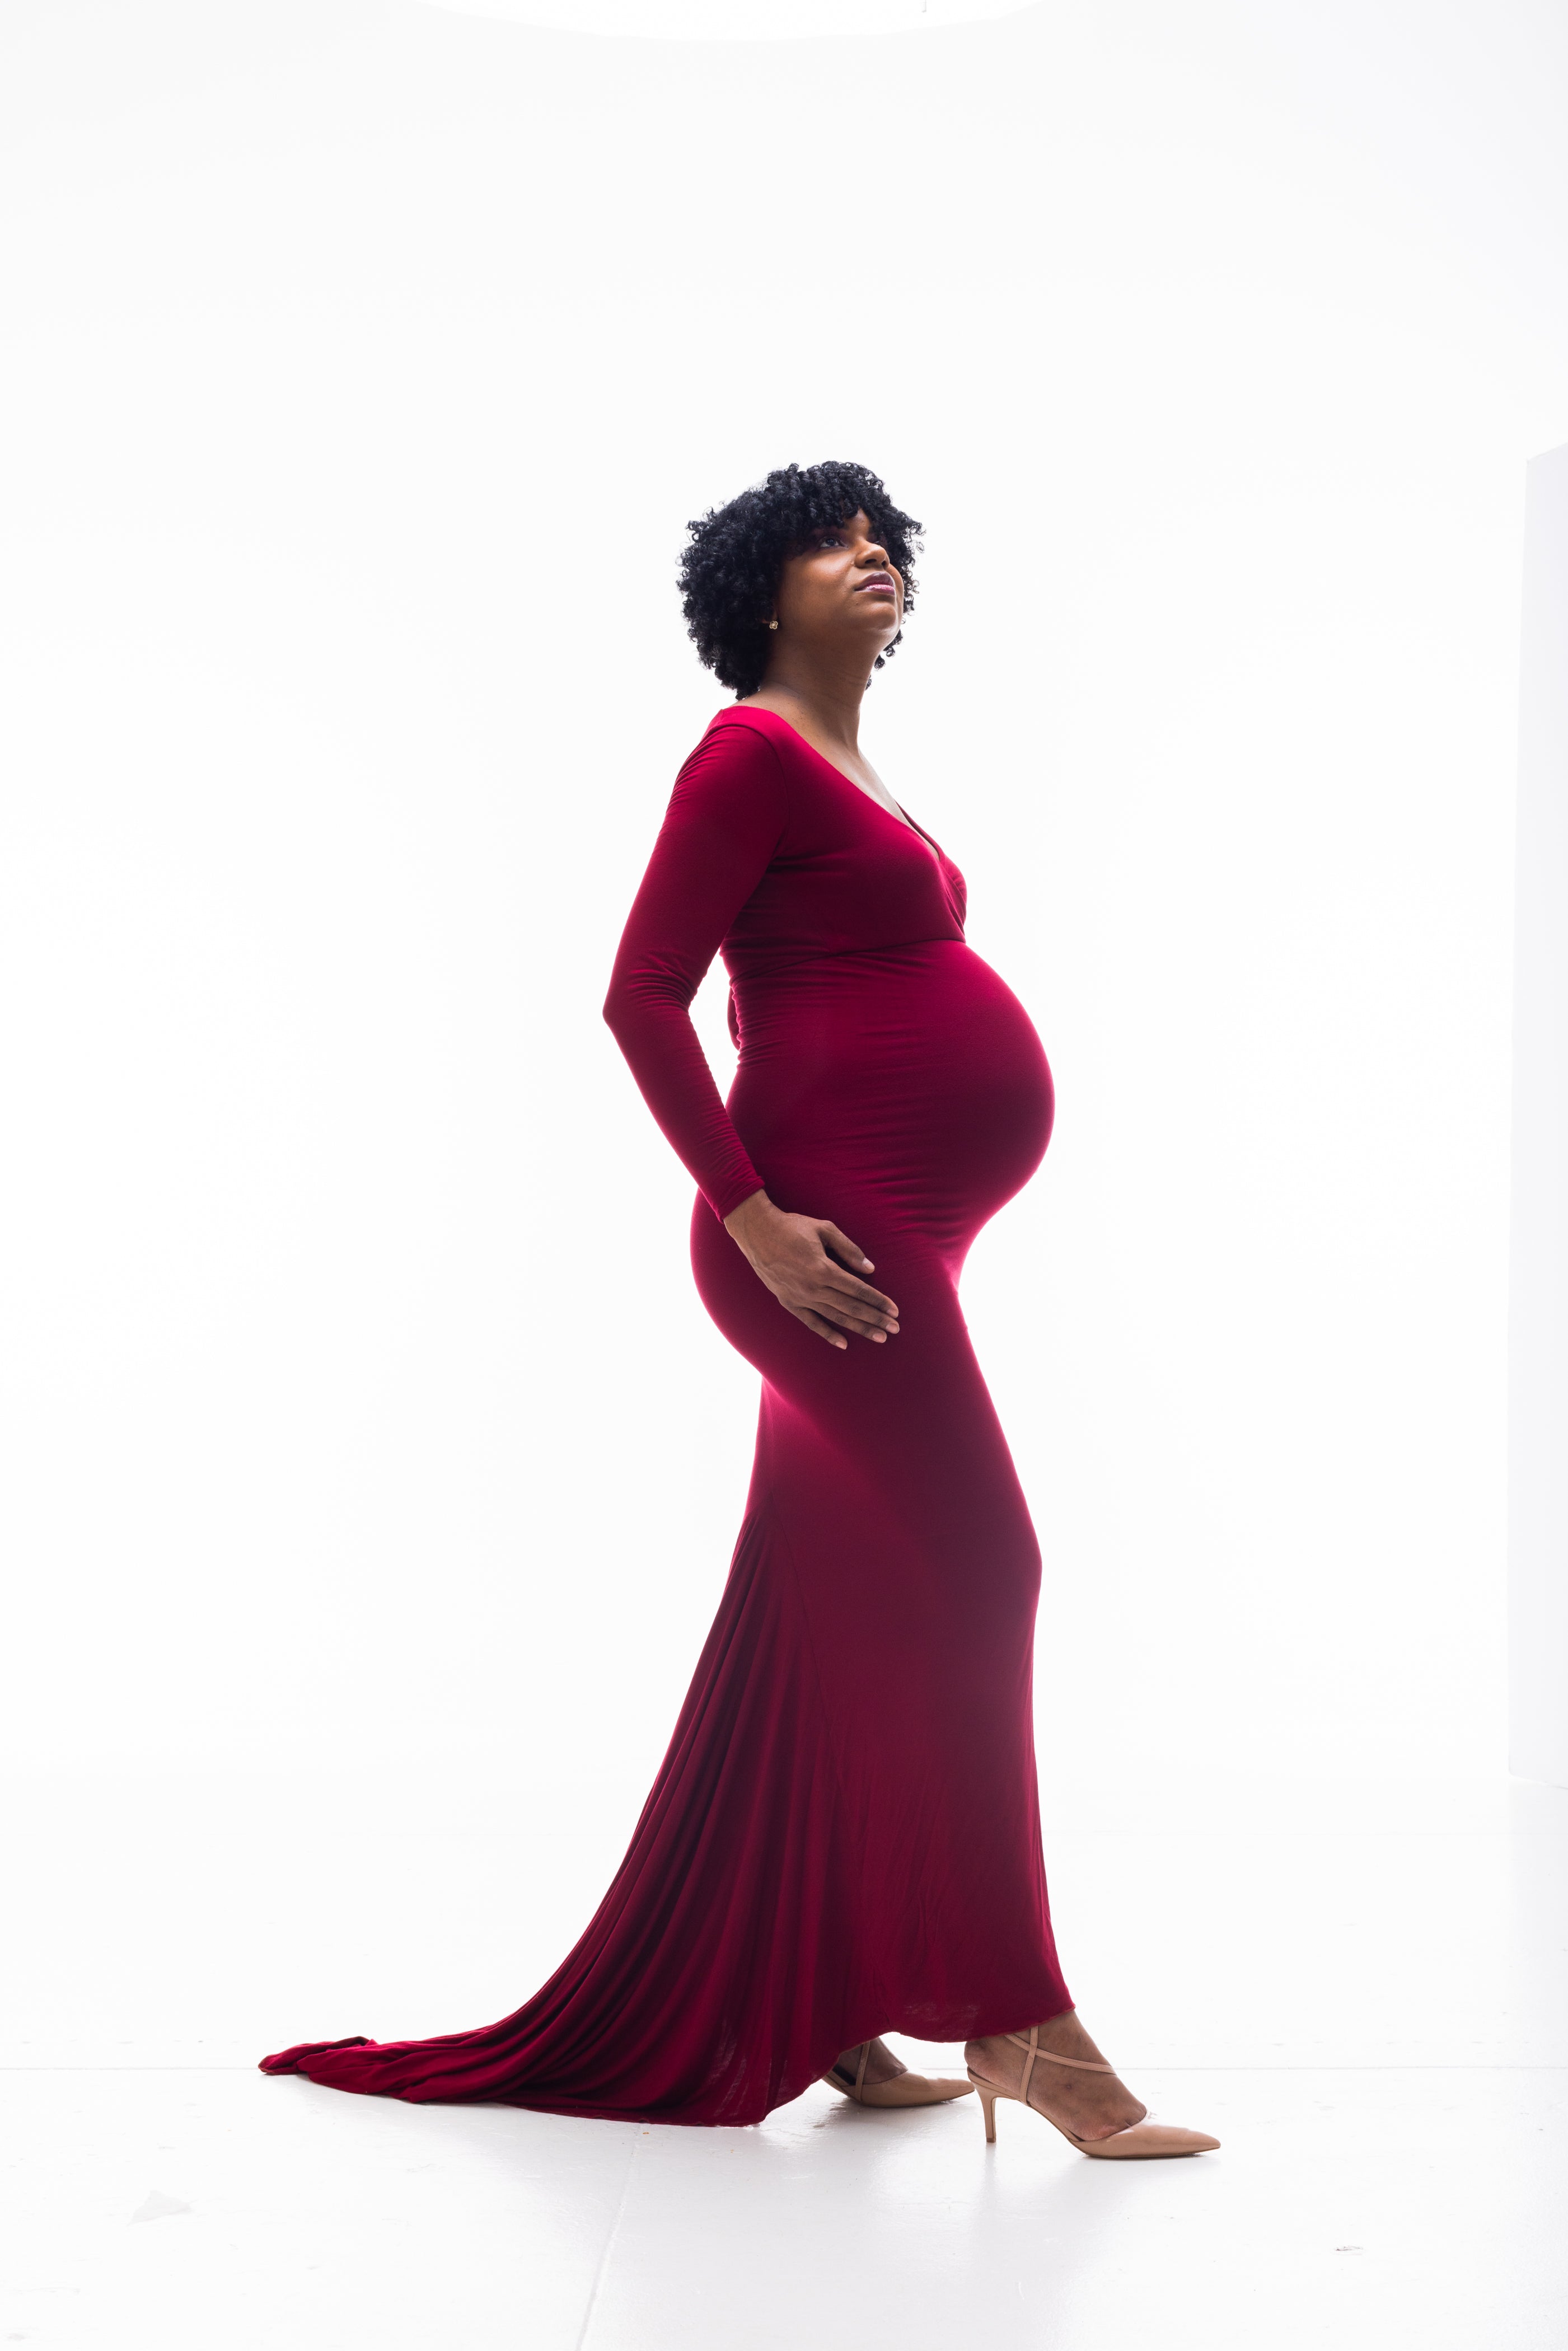 maternity photography nyc - maternity photoshoot studio